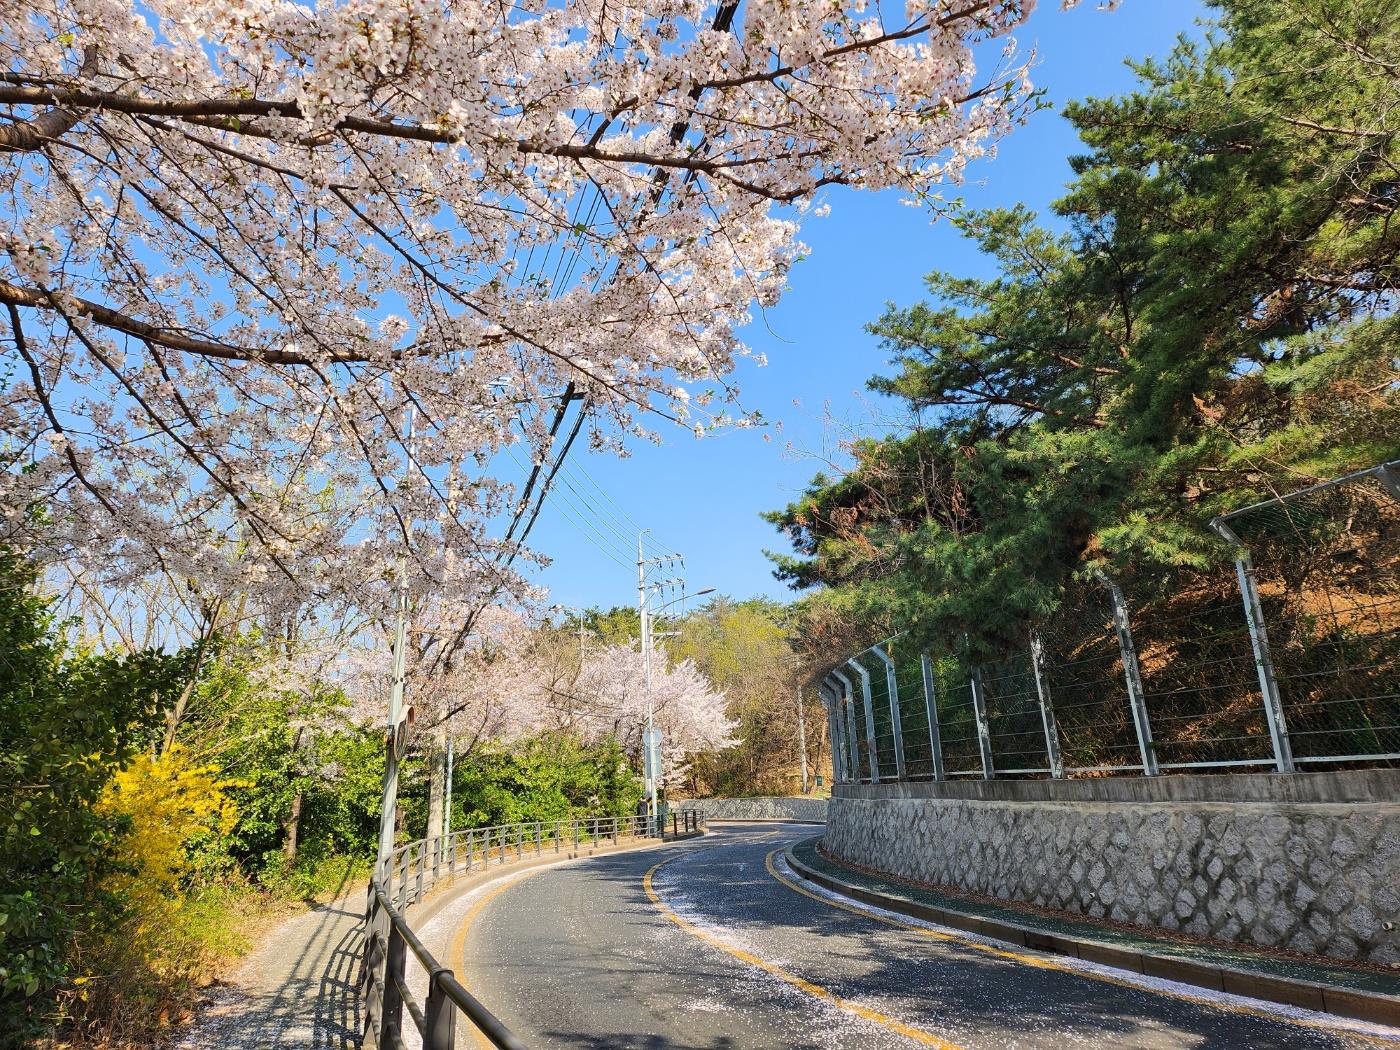 The path leading up to Korea University’s dorms.